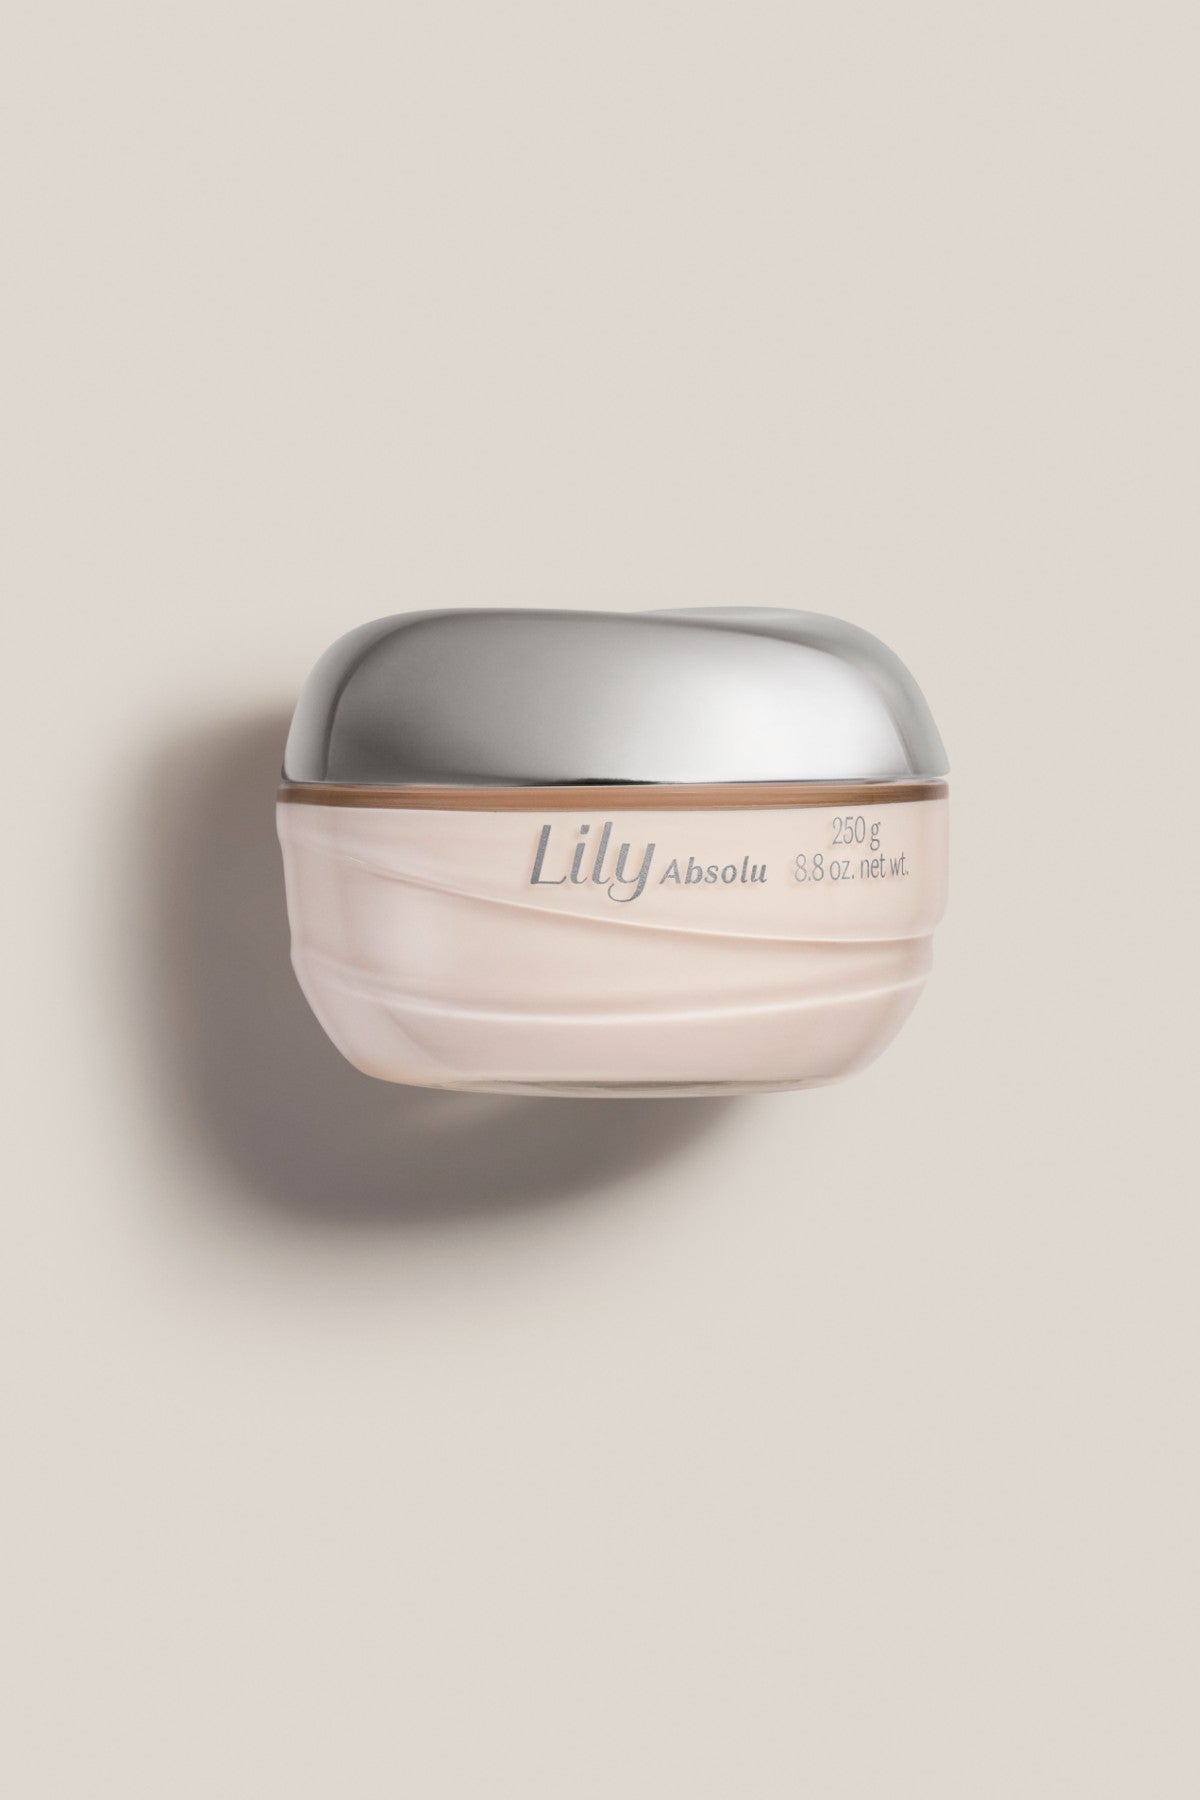 Lily Absolu Satin Body Cream